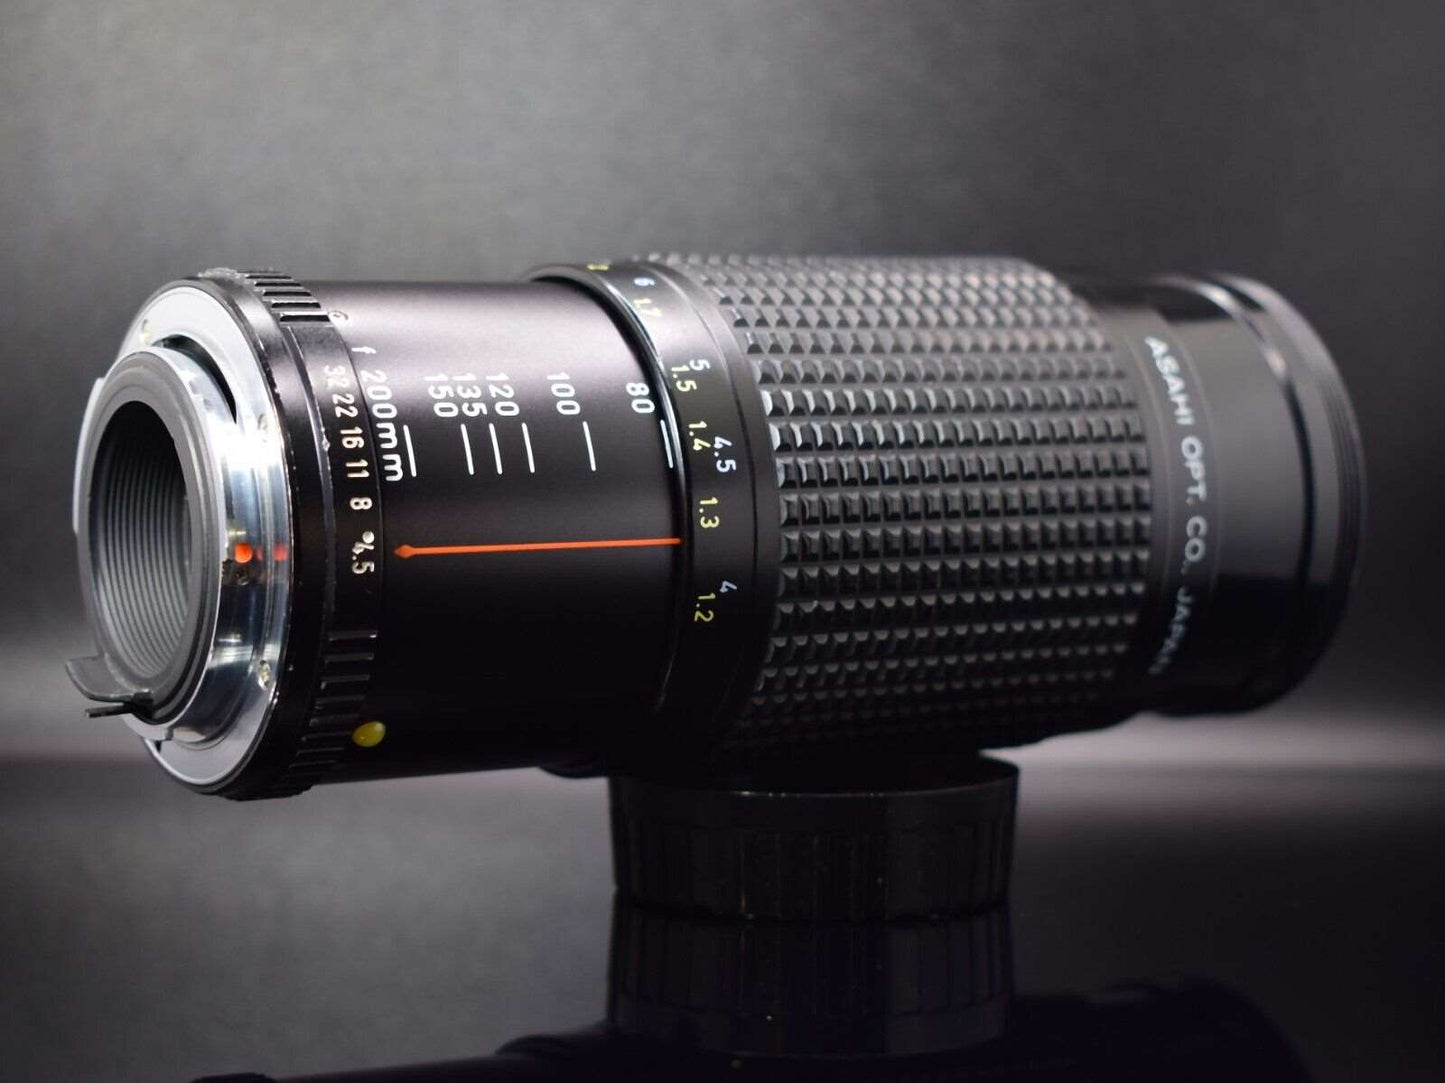 ASAHI Pentax Camera Zoom Lens SMC Pentax-M Zoom f4.5 80-200mm in Black with Caps